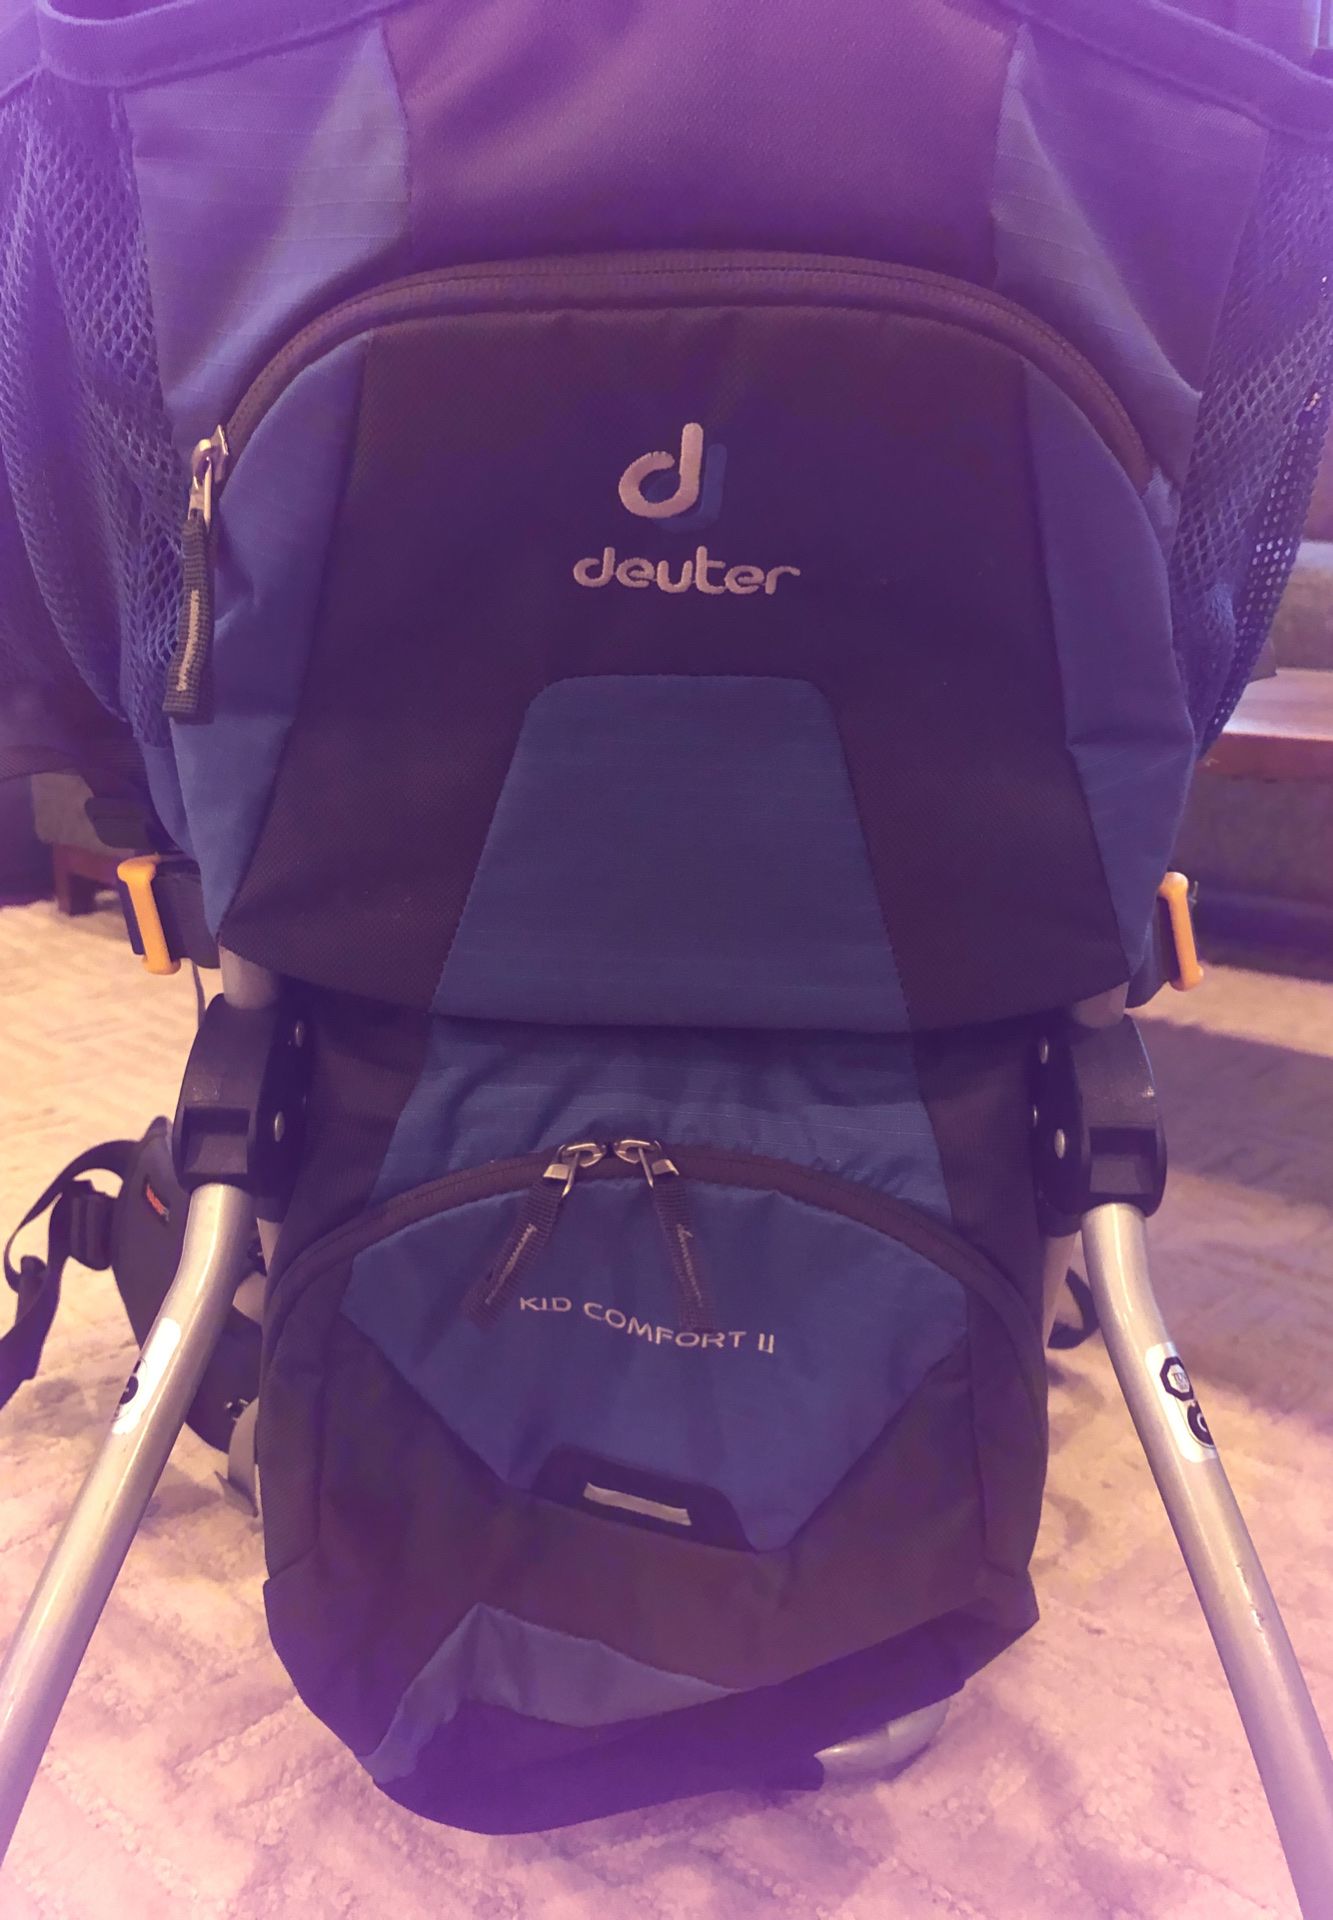 Deuter Kid Comfort II Toddler Carrier / Backpack